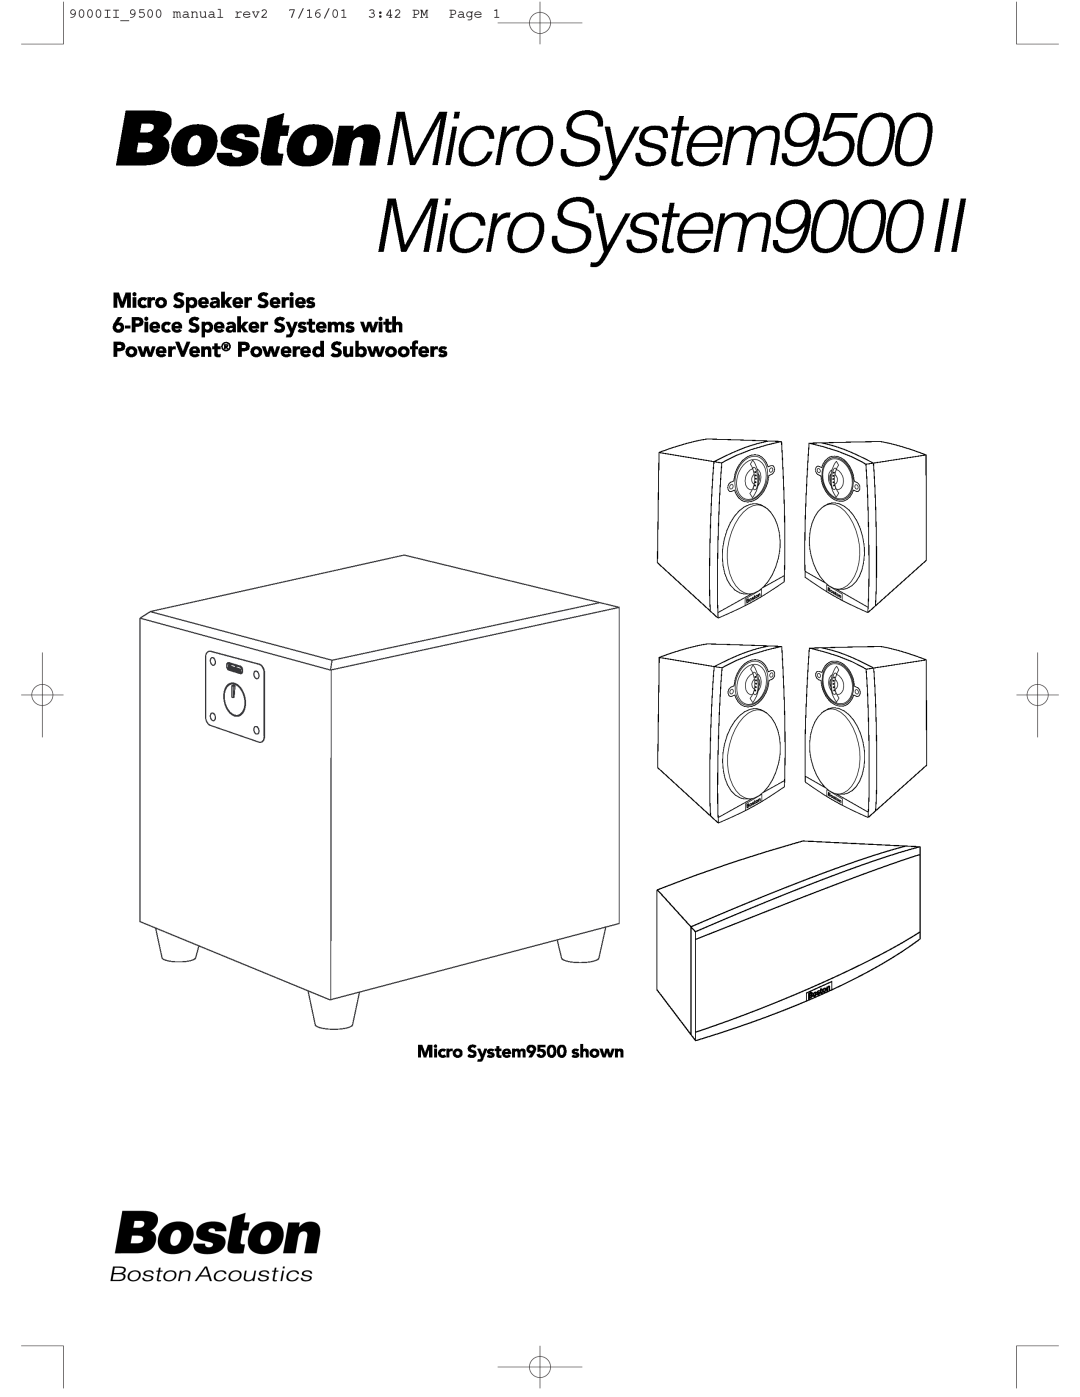 Boston Acoustics manual MicroSystem9500 MicroSystem9000, Micro Speaker Series, Micro System9500 shown 